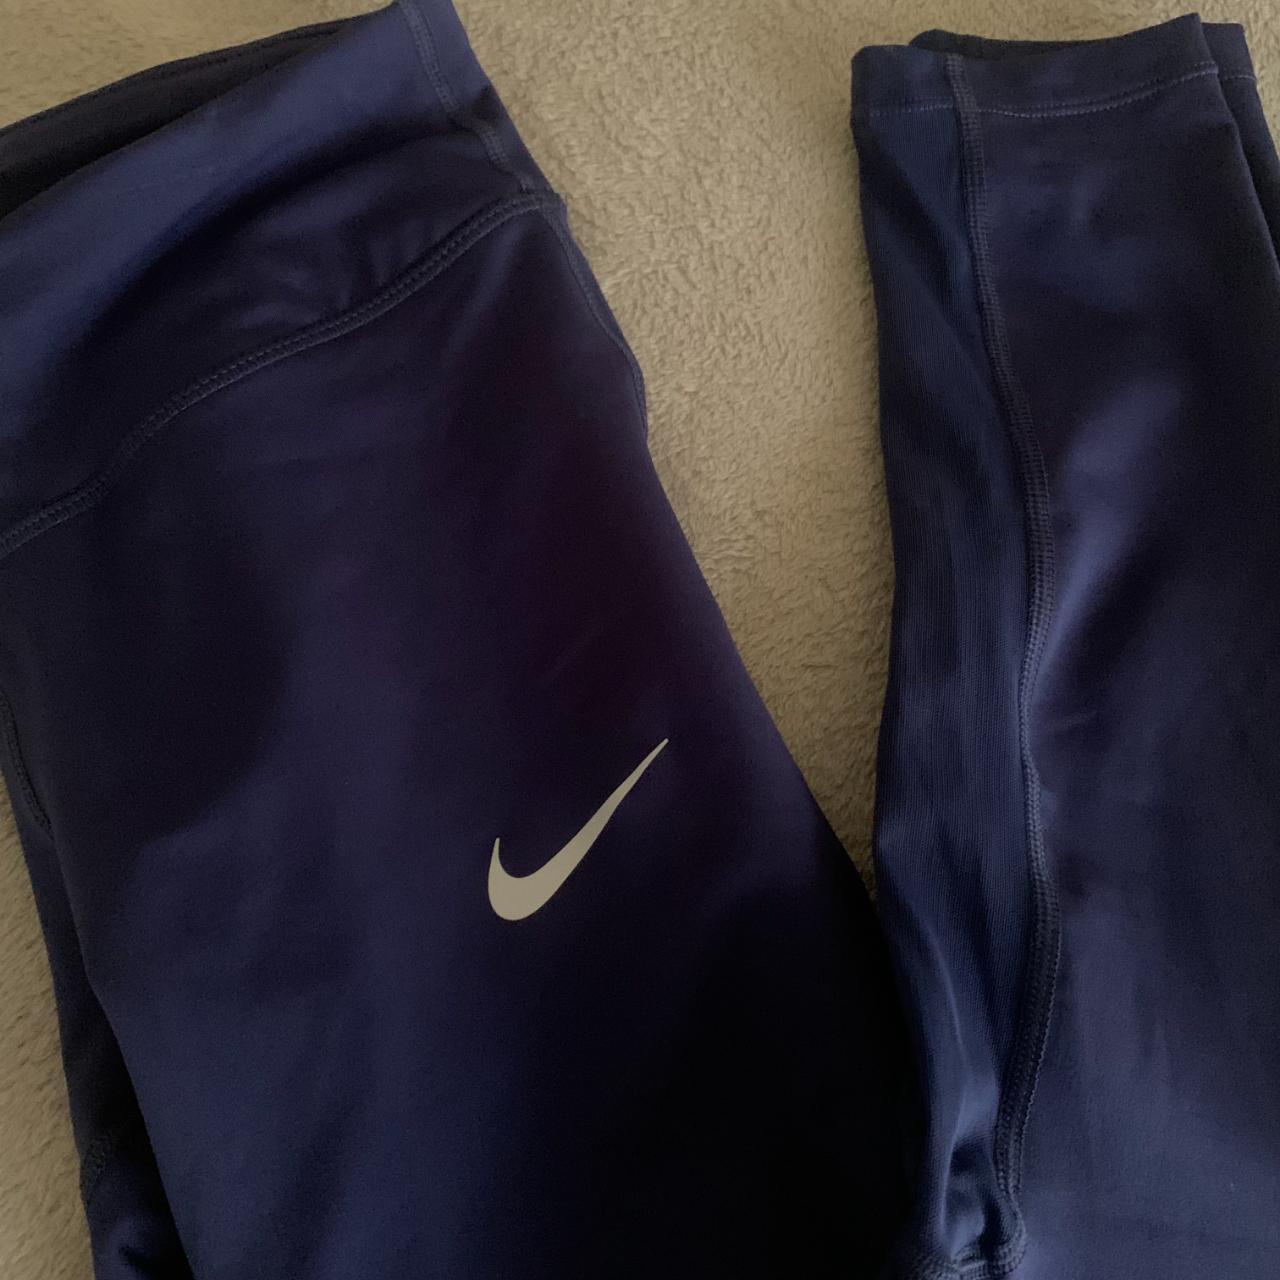 Nike navy leggings/training tights Size S in Nike... - Depop